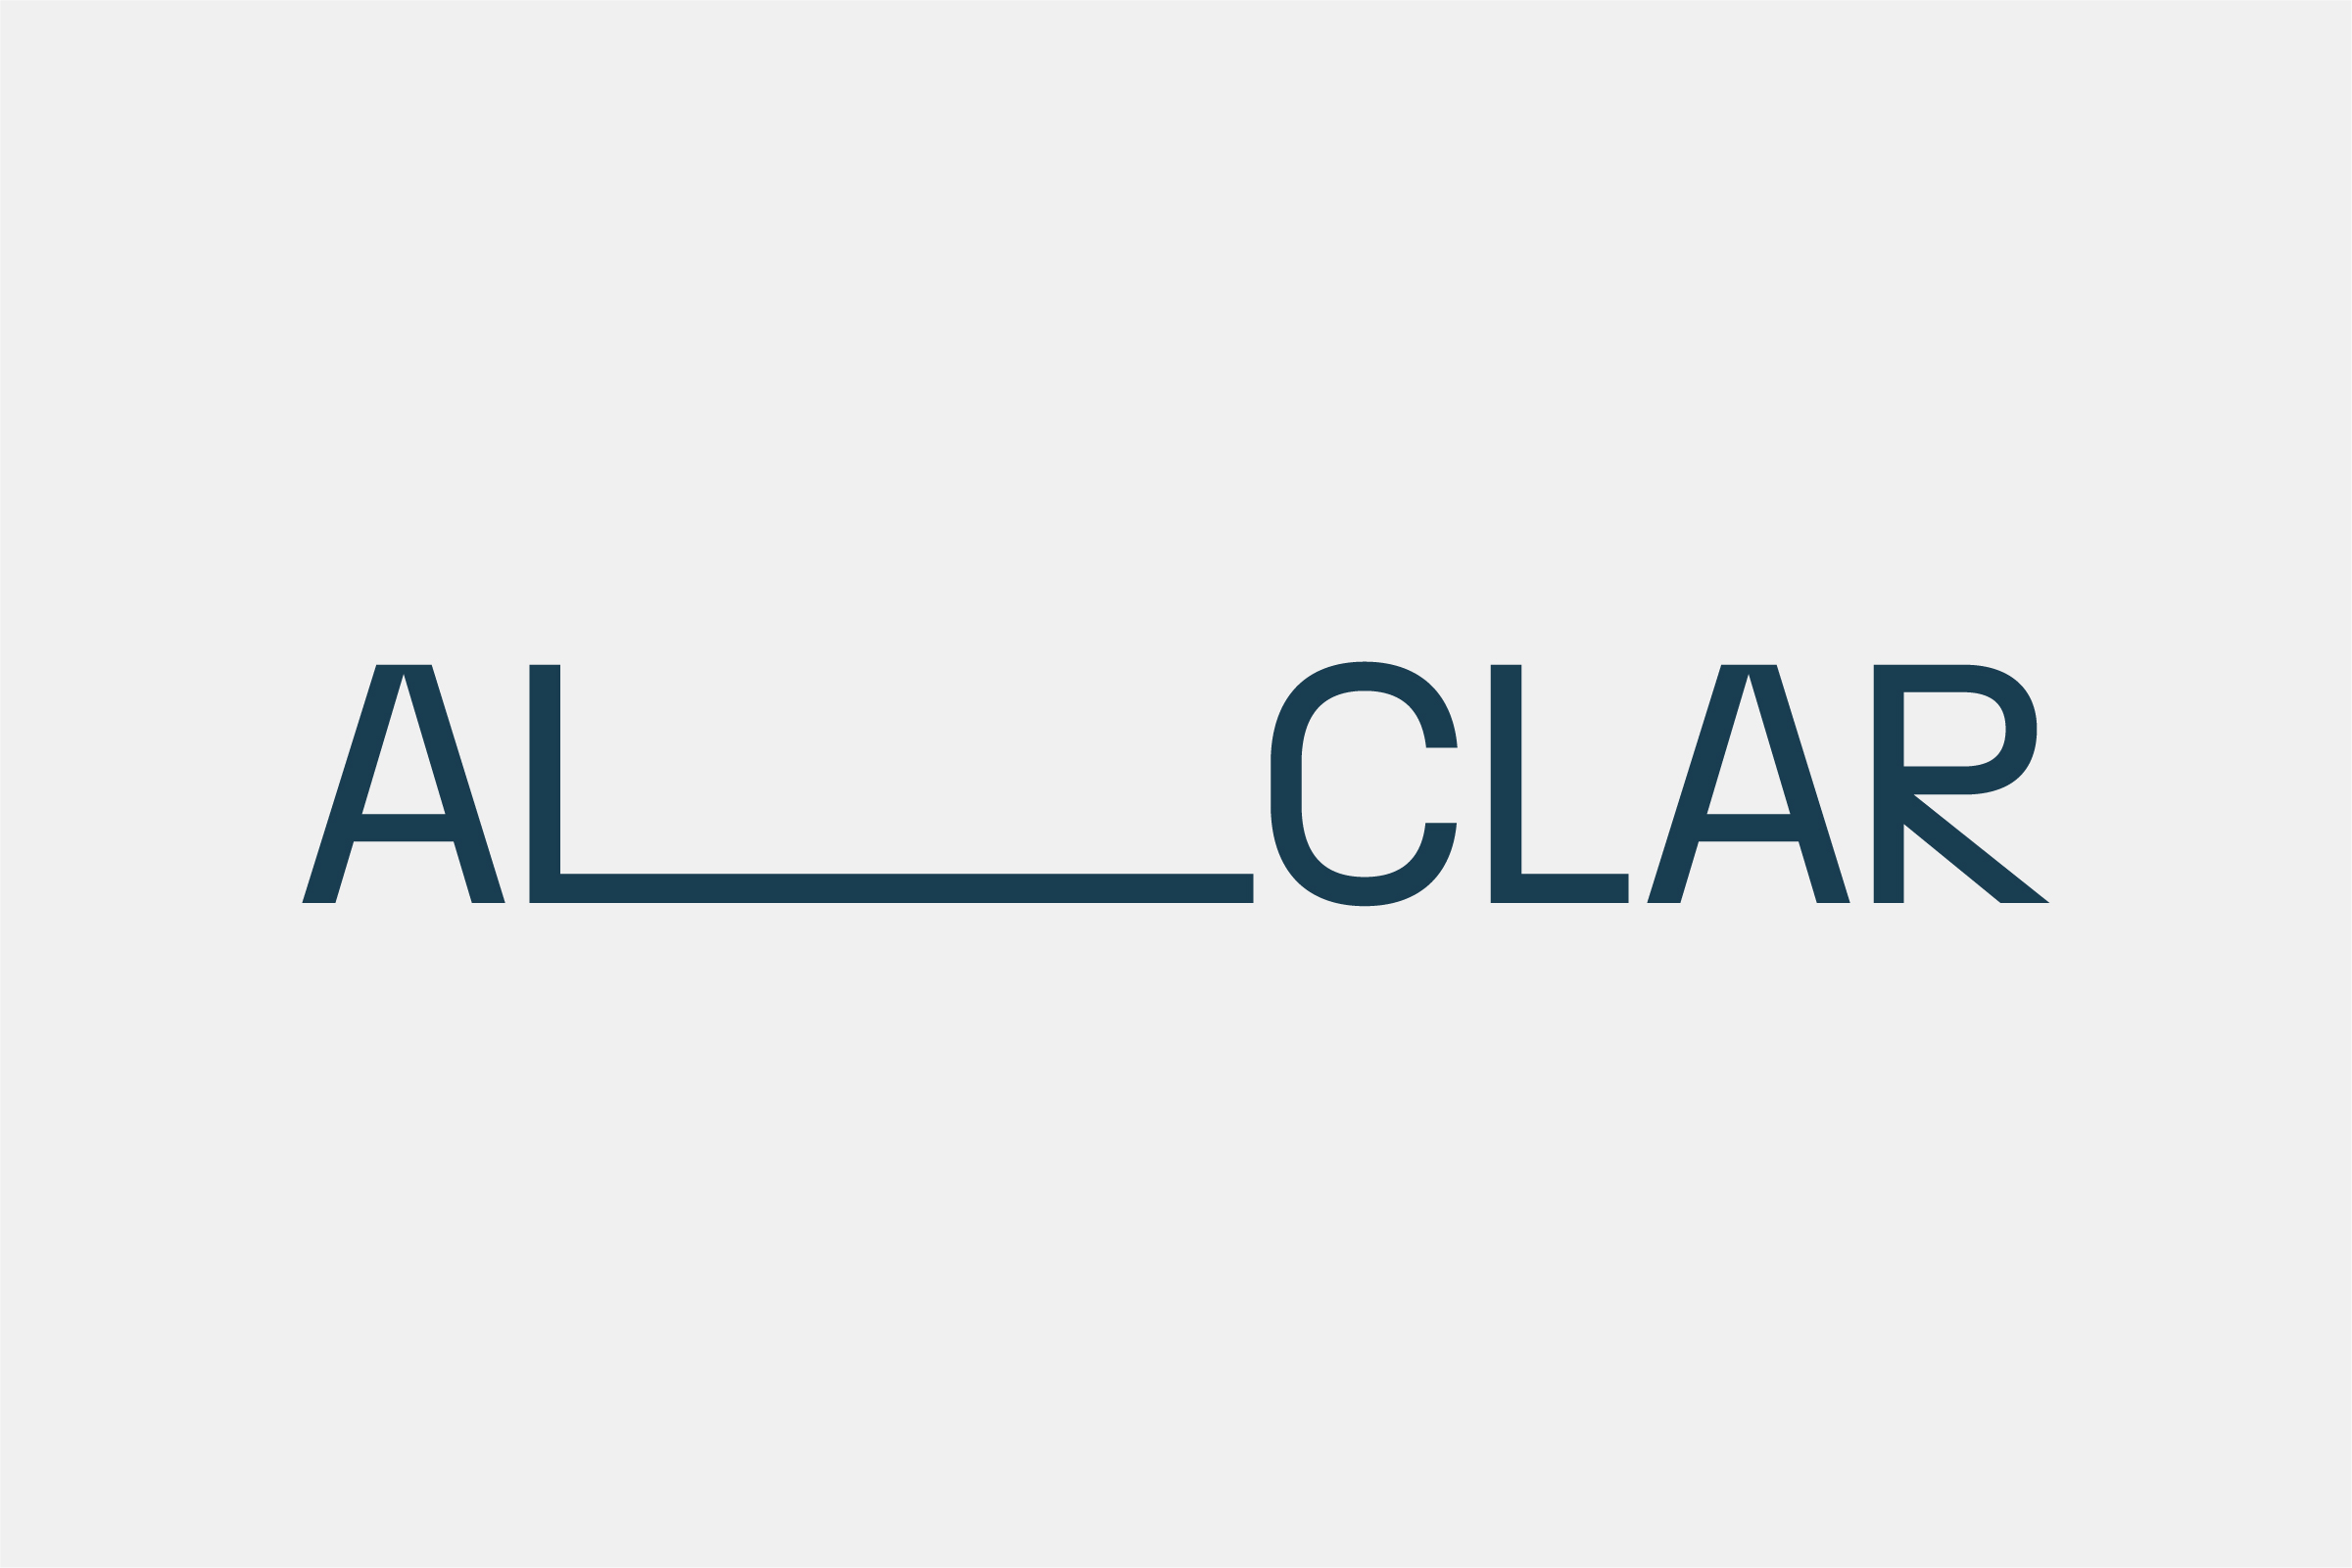 Alclar-Logo-2400x1600px-01-05